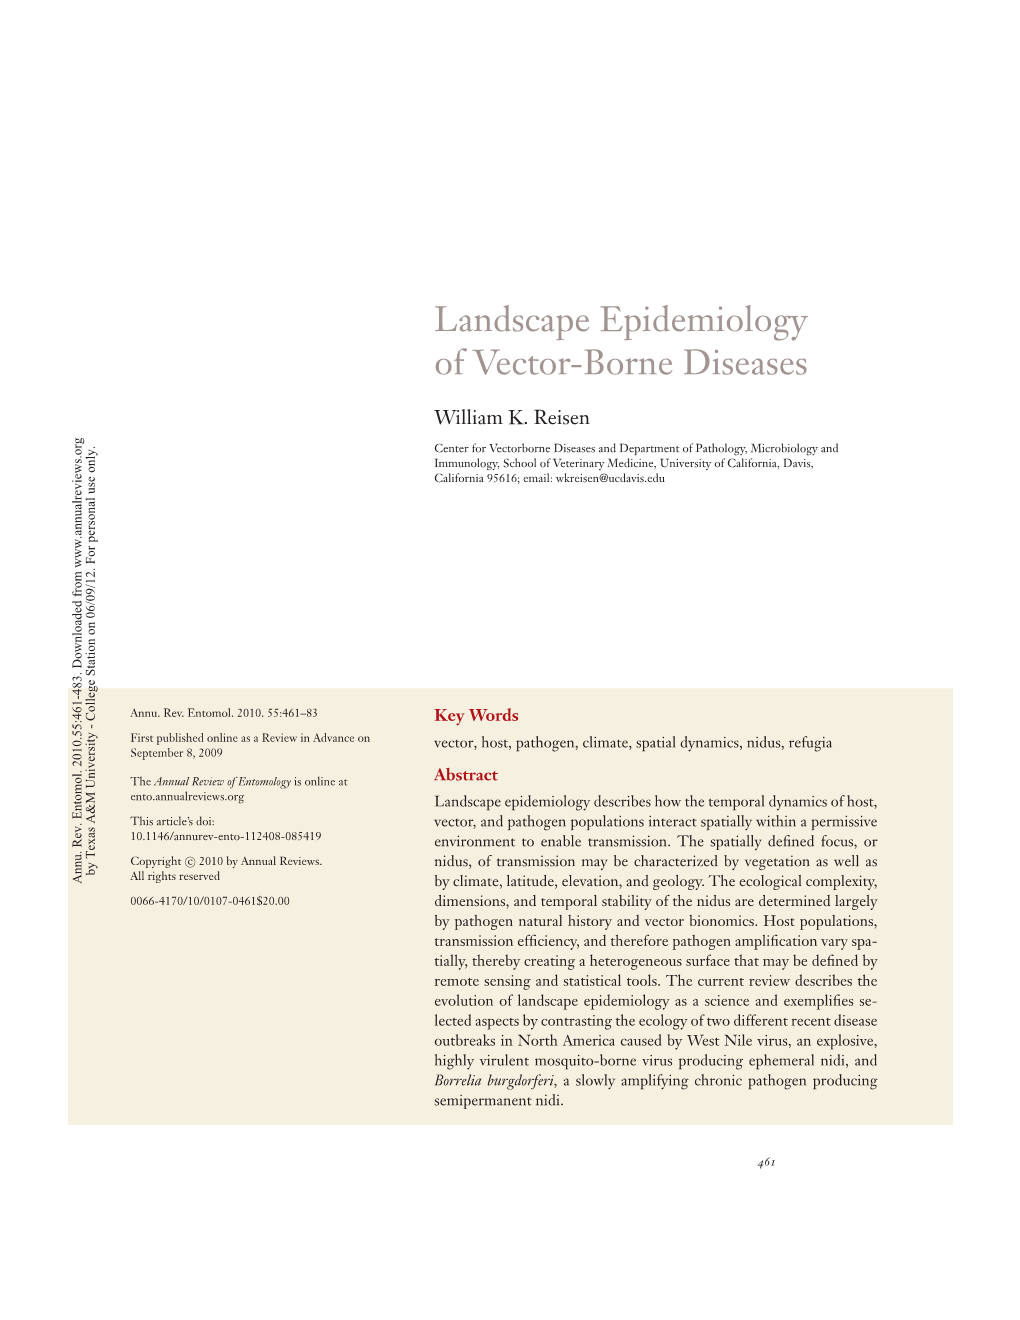 Landscape Epidemiology of Vector-Borne Diseases